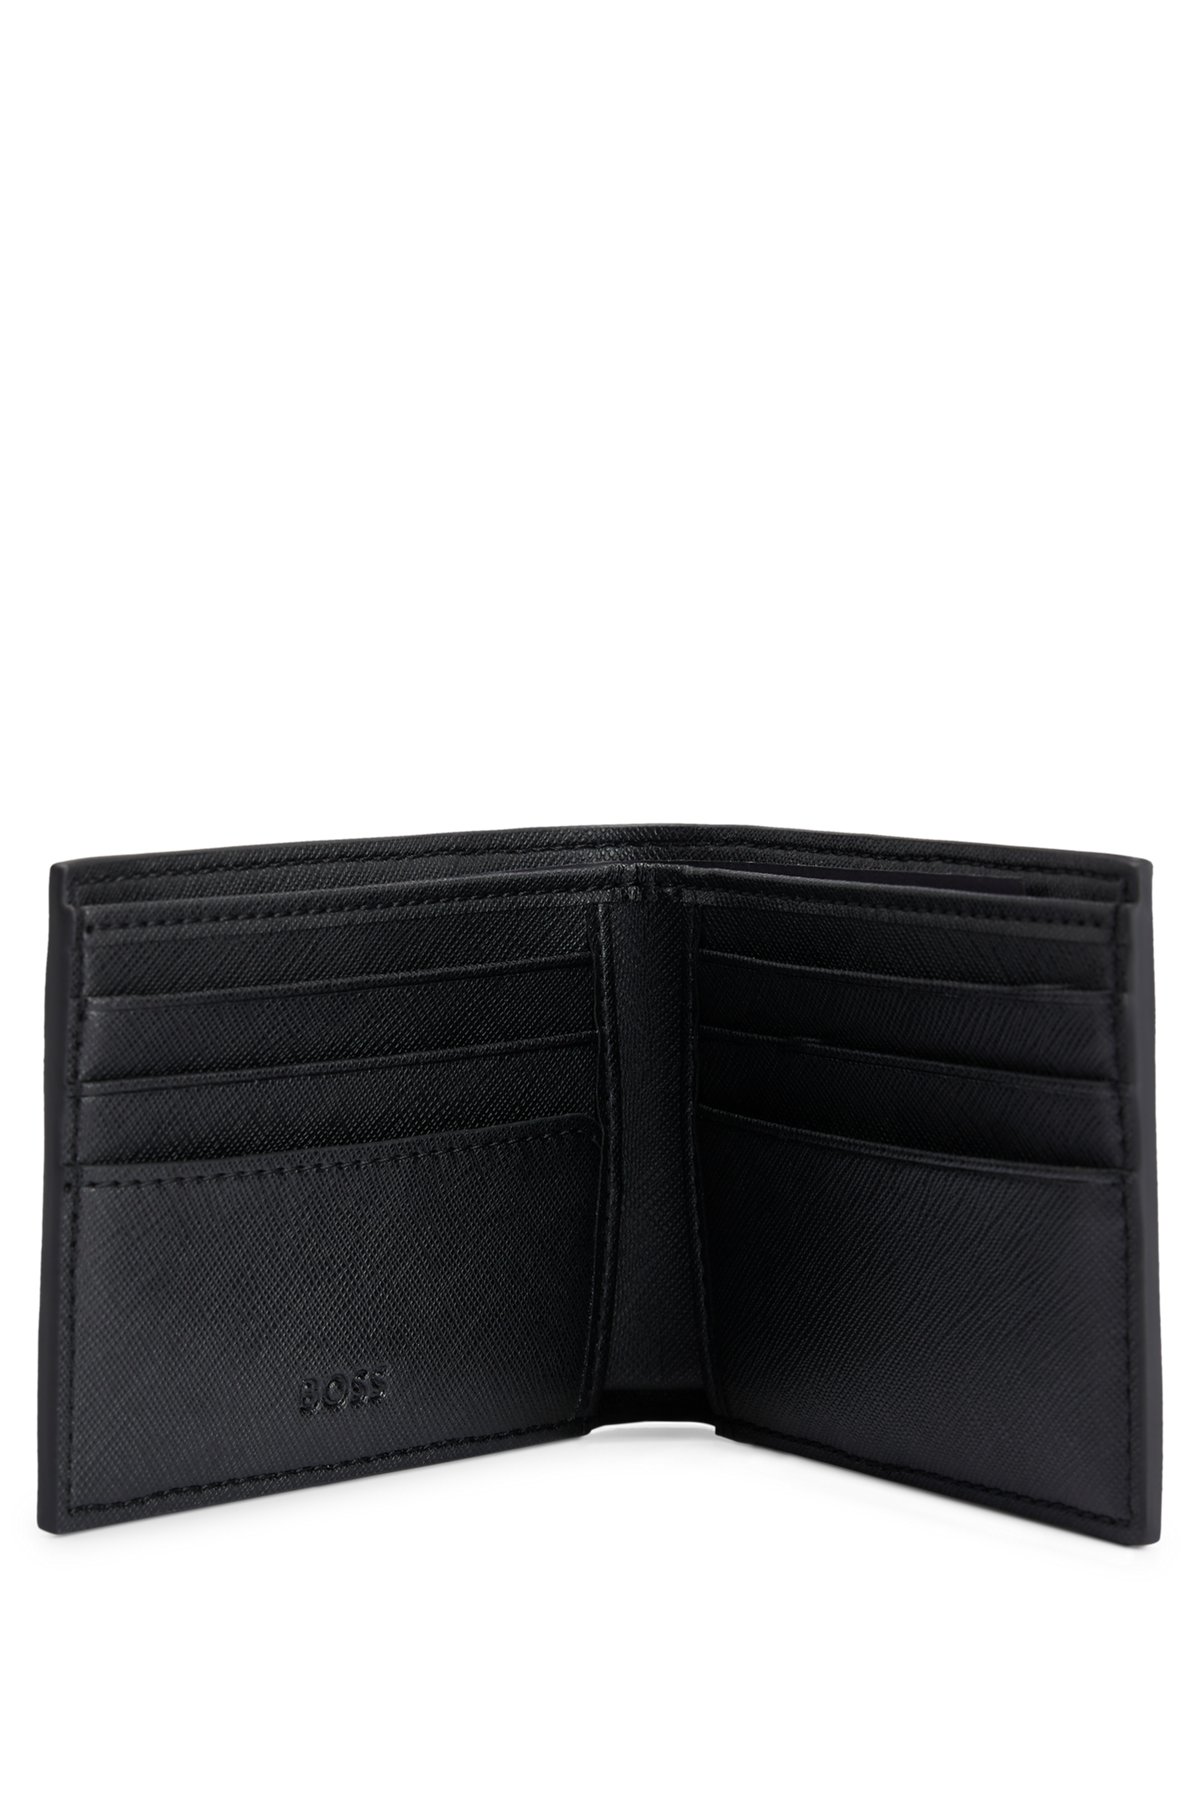 Structured billfold wallet with monogram detailing, Black